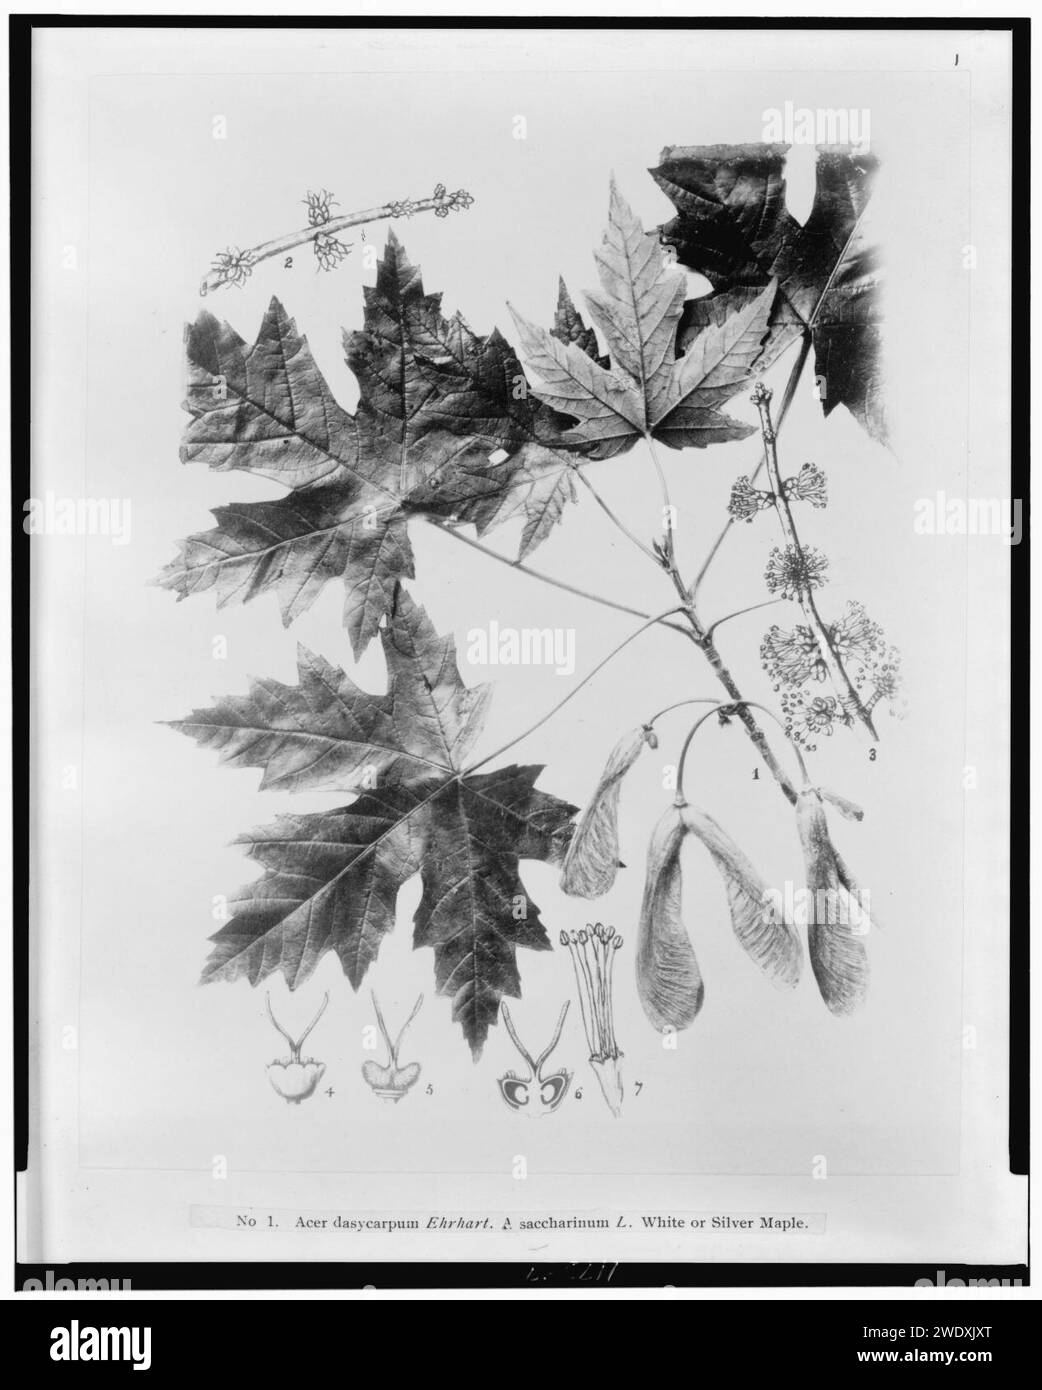 Acer dasycarpum Ehrhart - A saccharinum L. white or silver maple Stock Photo